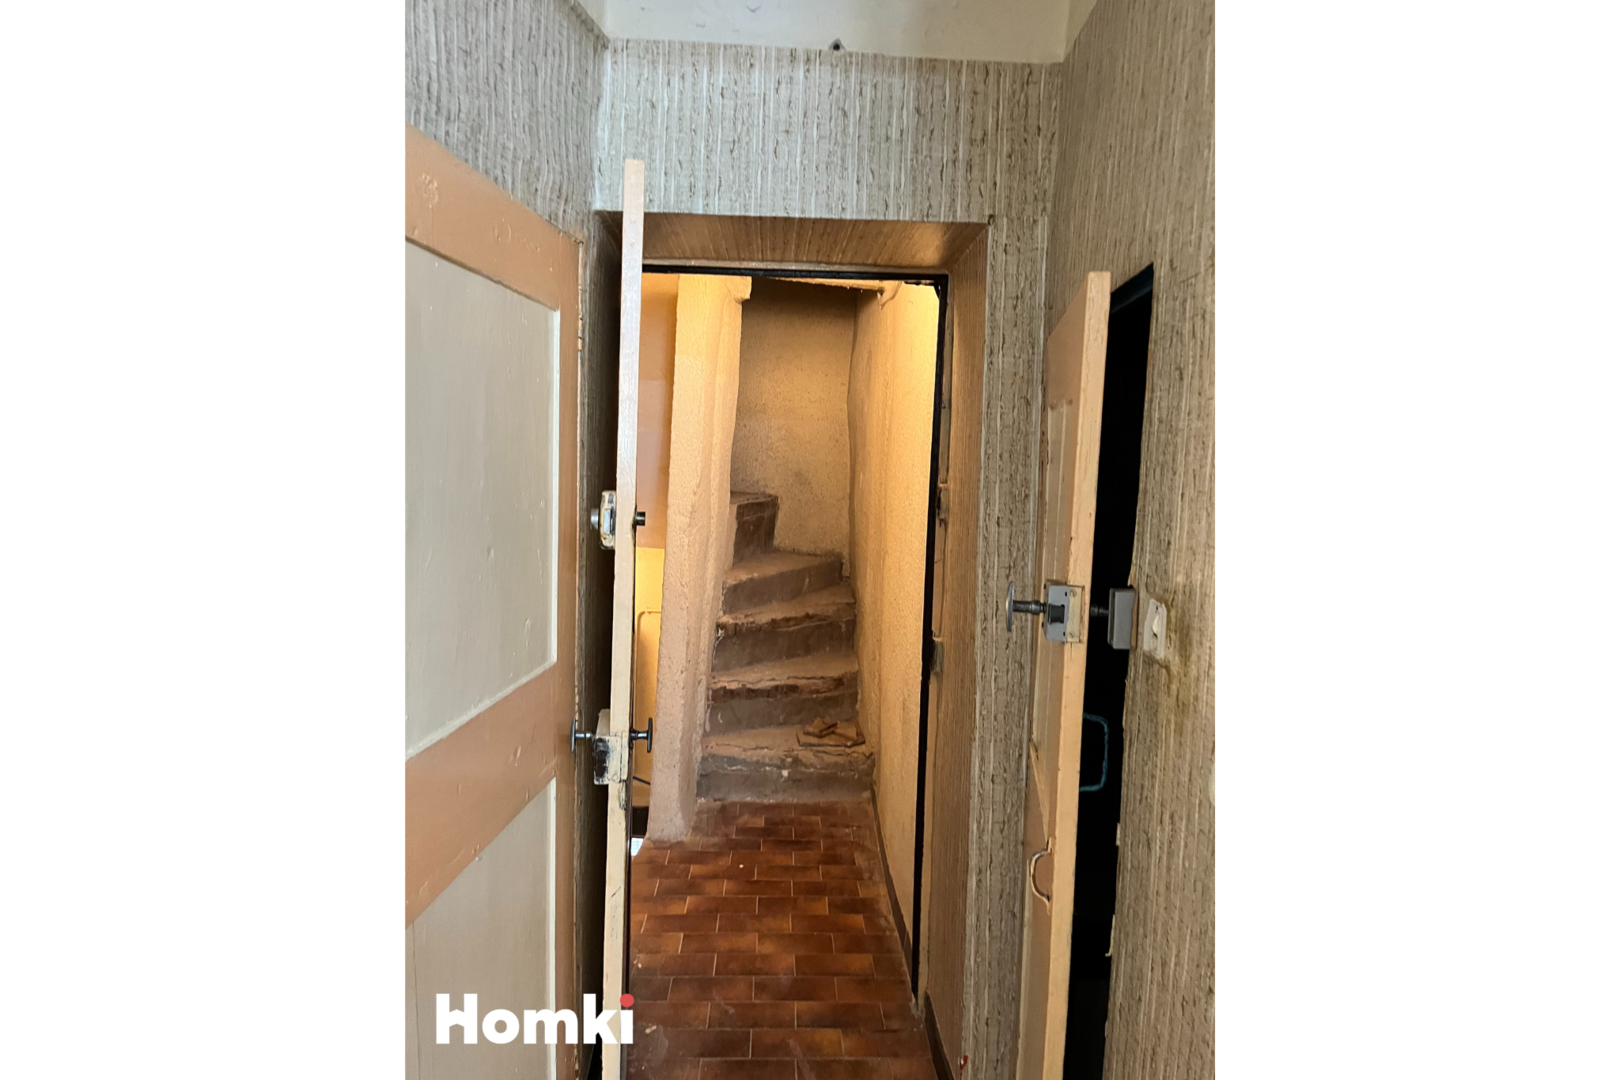 Homki - Vente Appartement  de 100.0 m² à Flayosc 83780